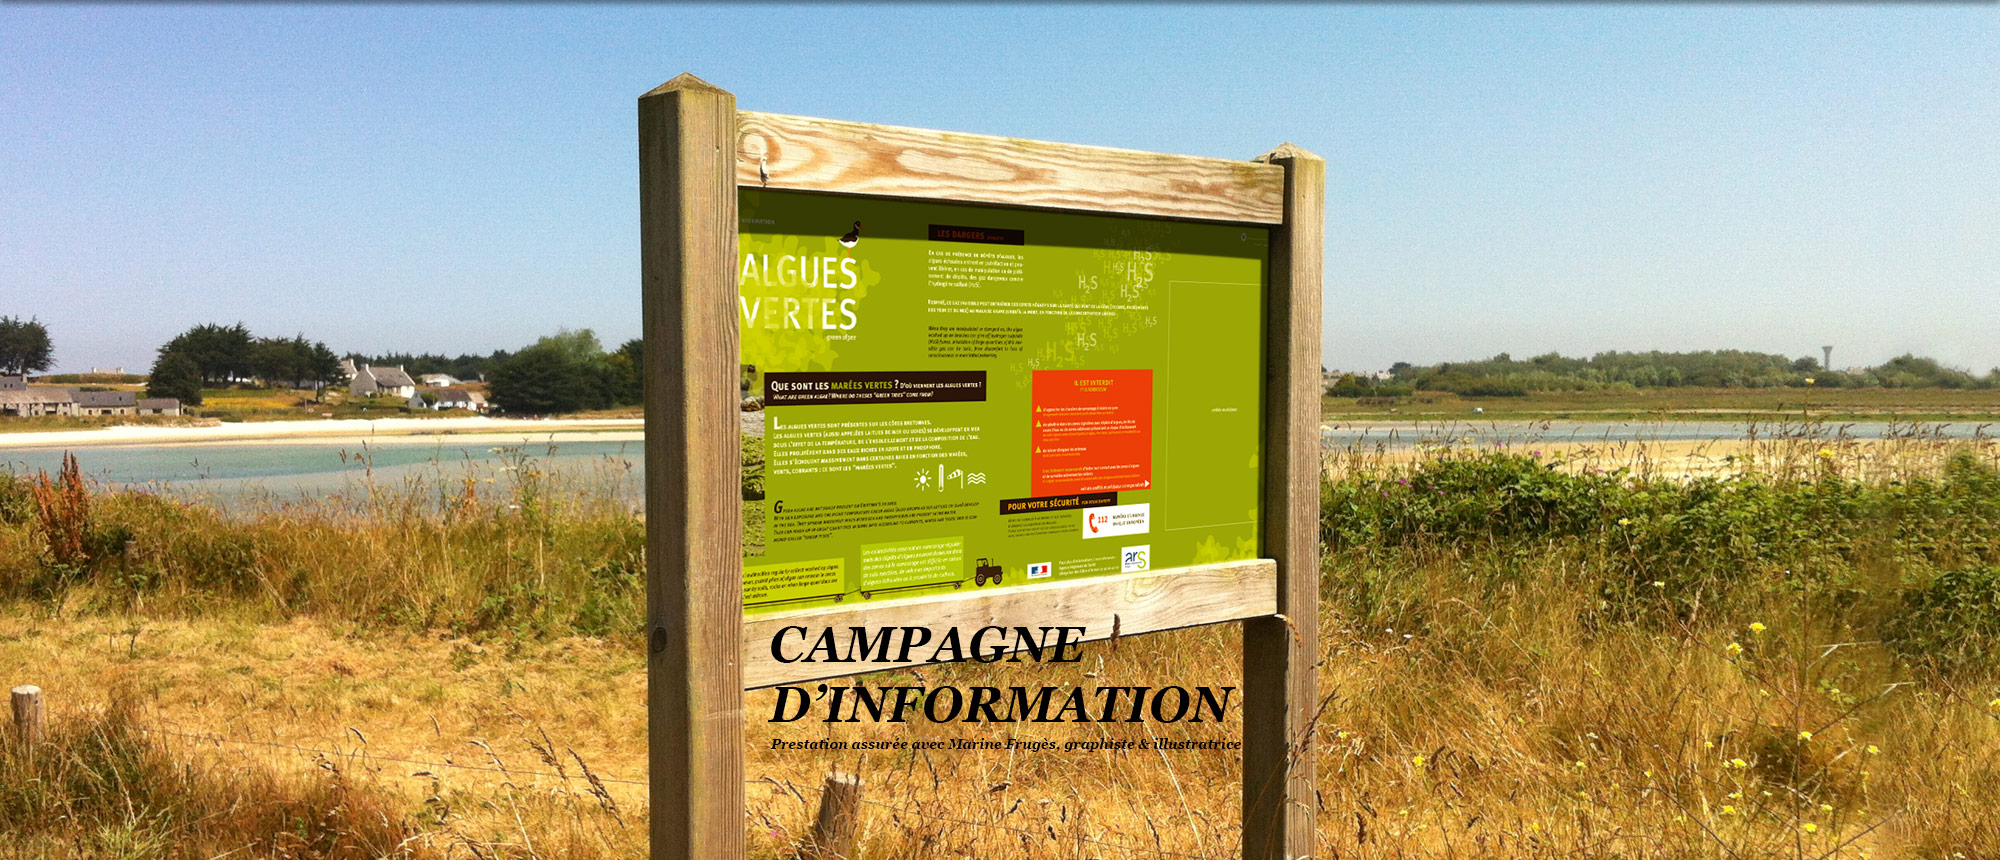 ARS campagne d'informations algues vertes realise par l'agence Com's - Rennes